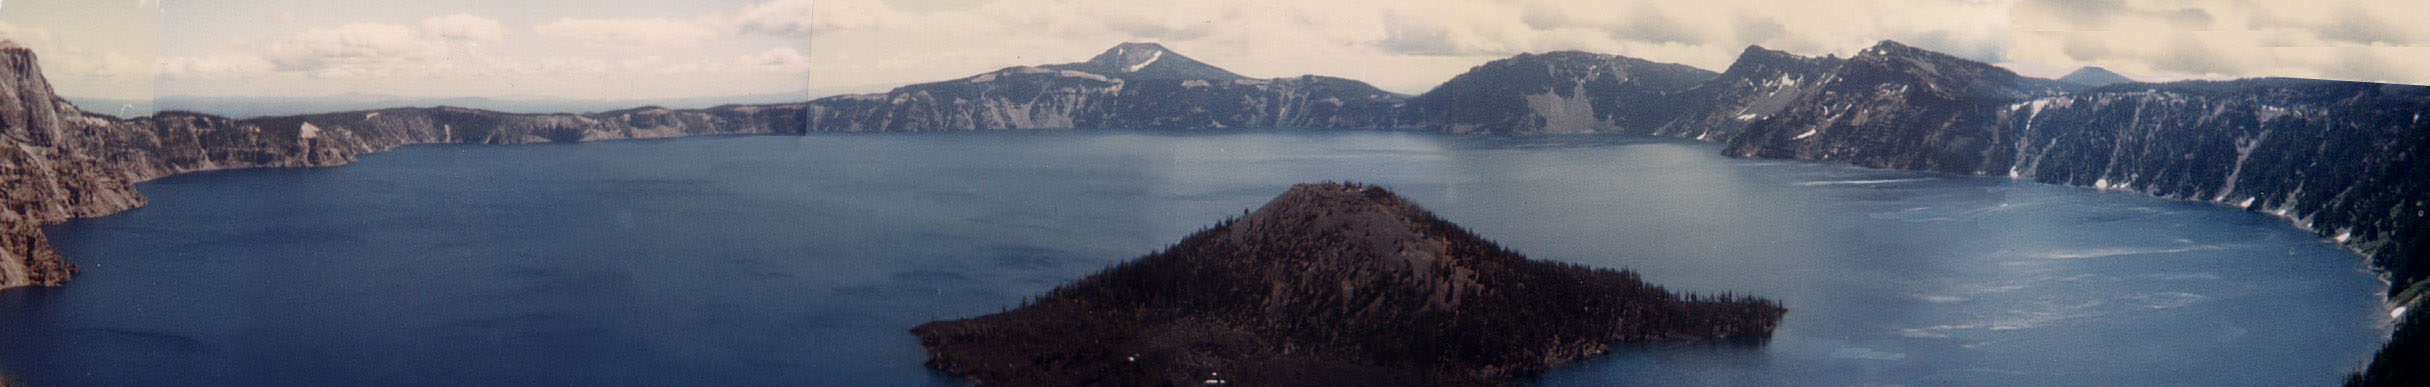 Watchman Overlook Crater Lake in 1982